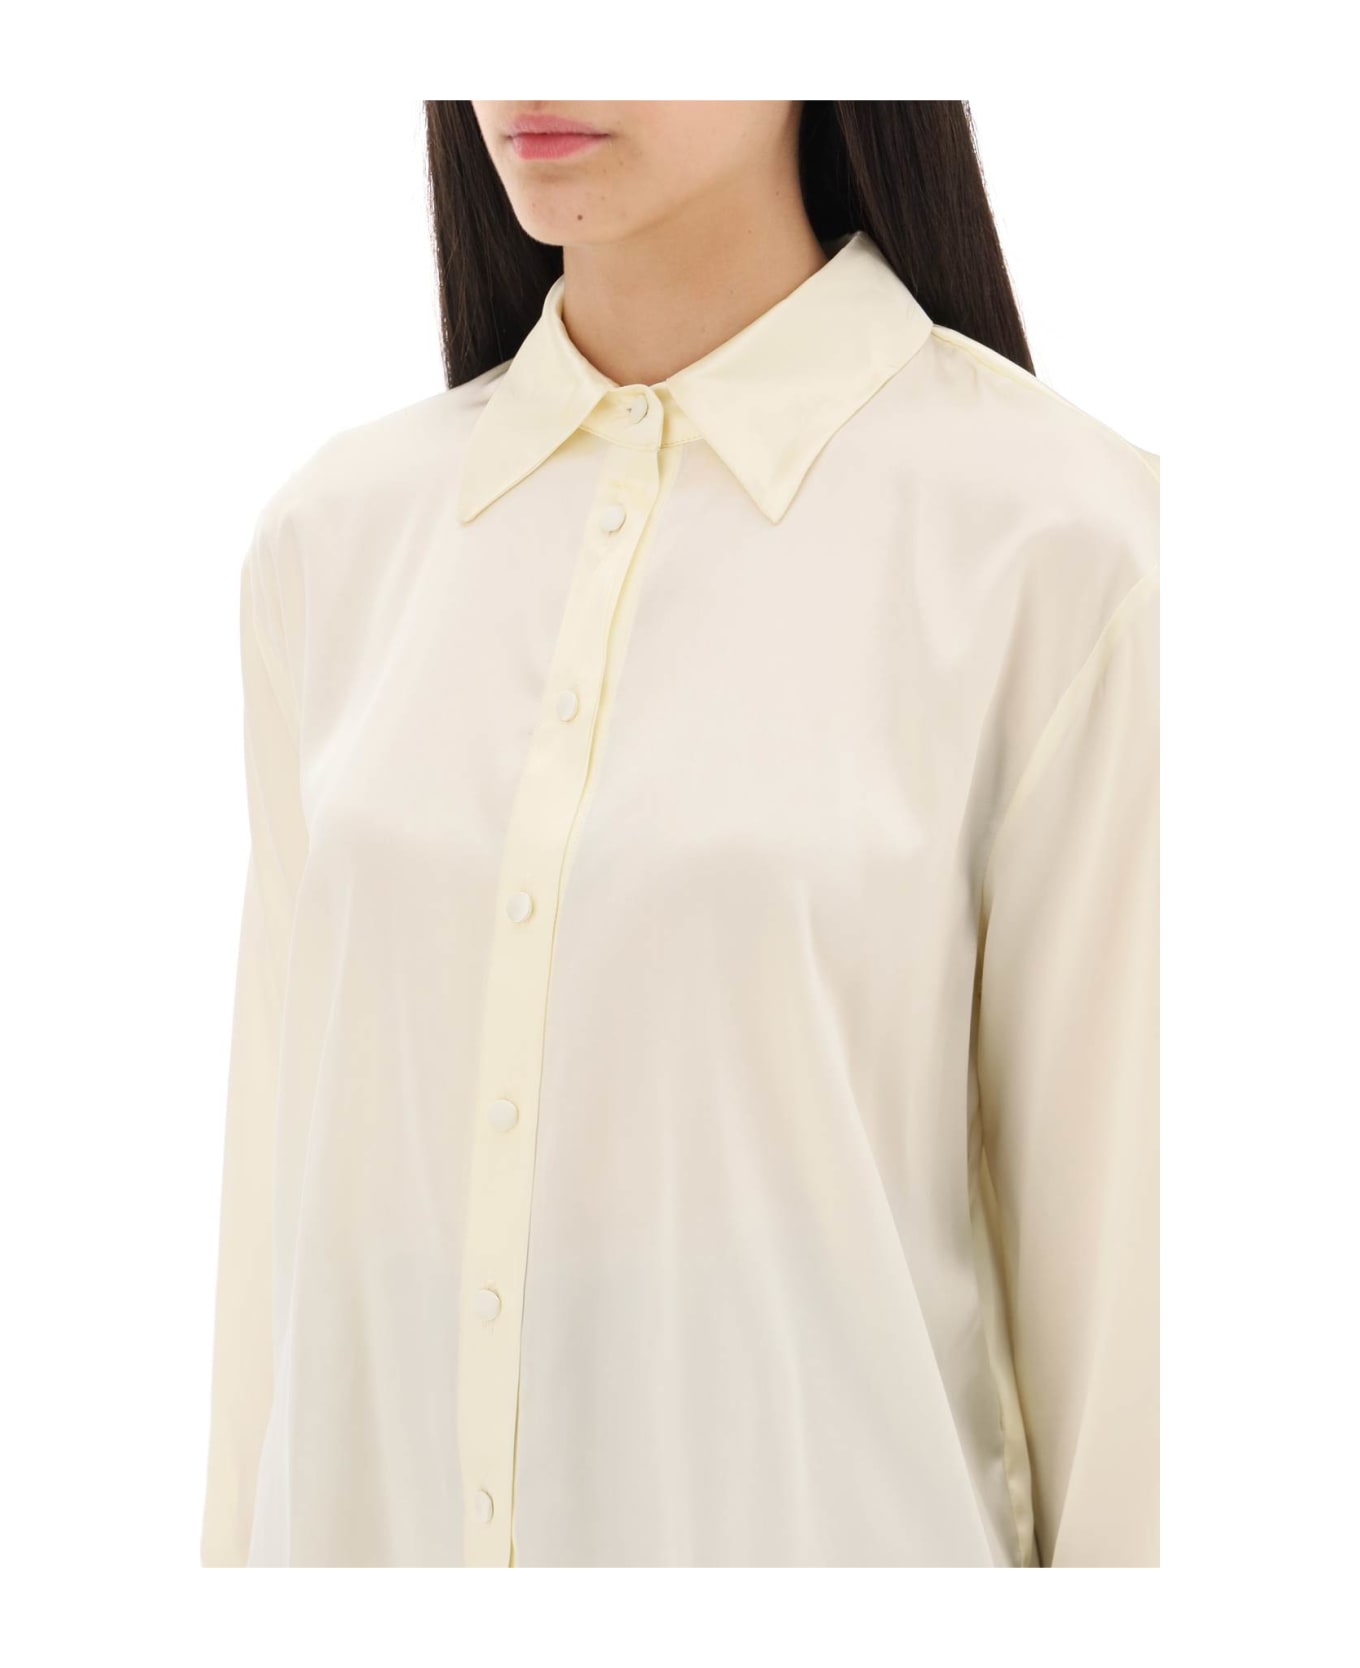 MVP Wardrobe 'sunset Boulevard' Satin Shirt - CREMA (White)